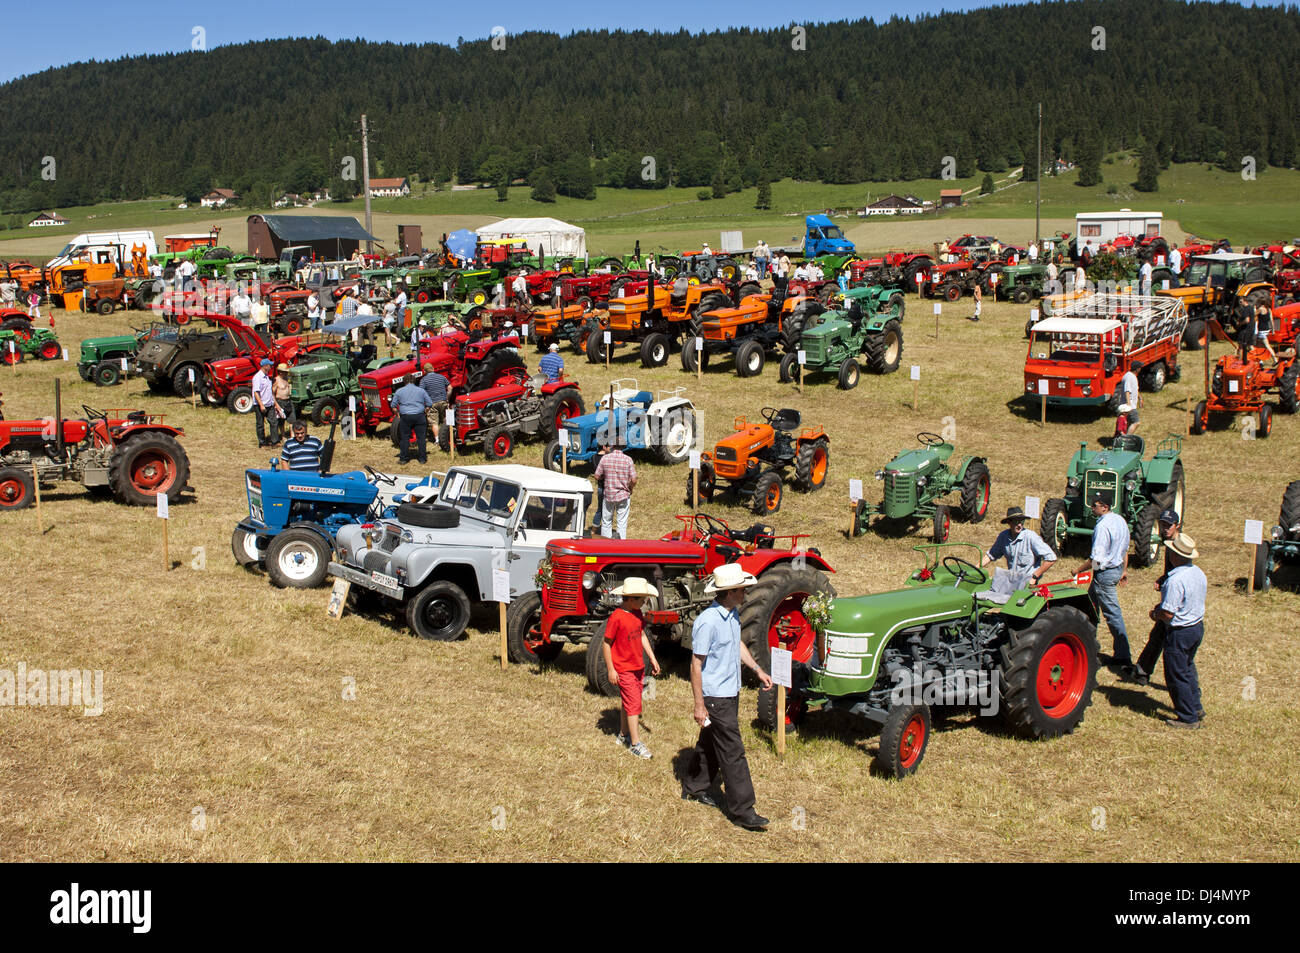 Tractus Mania, exposition de tracteurs anciens combattants Banque D'Images